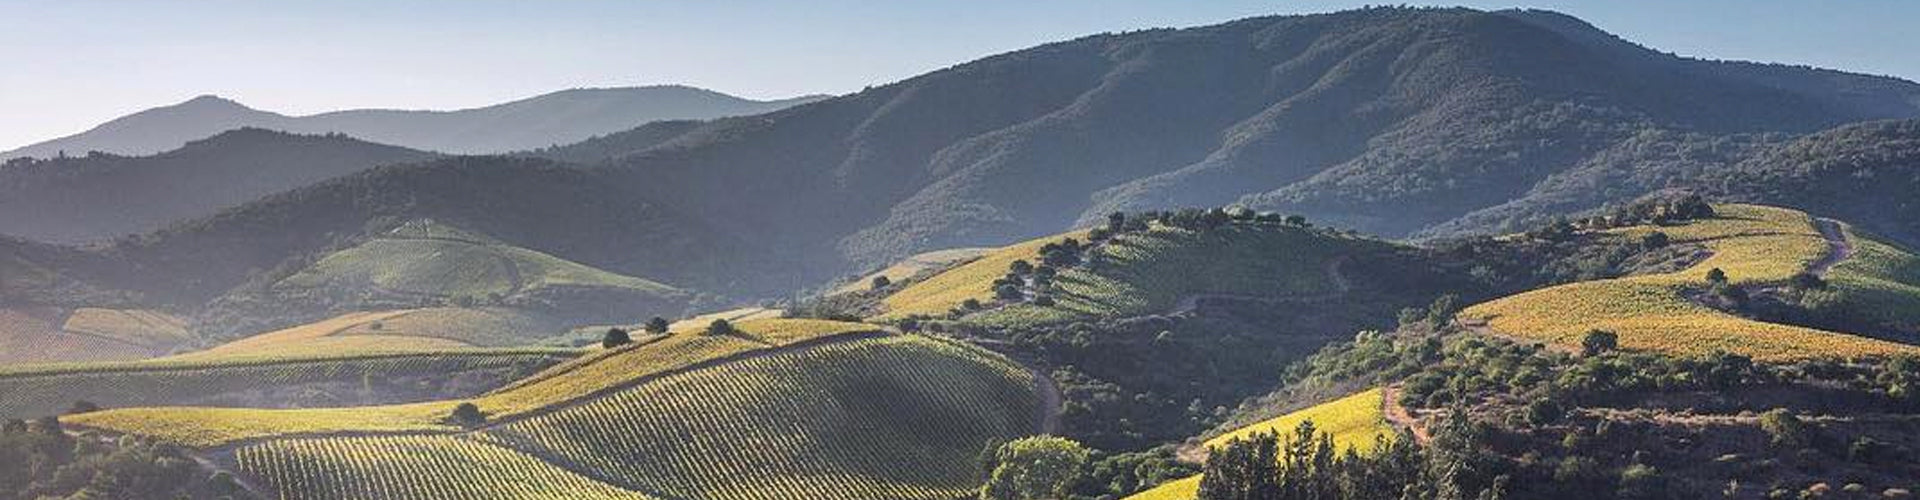 Vineyards in Chile's Aconcagua Valley Wine Region